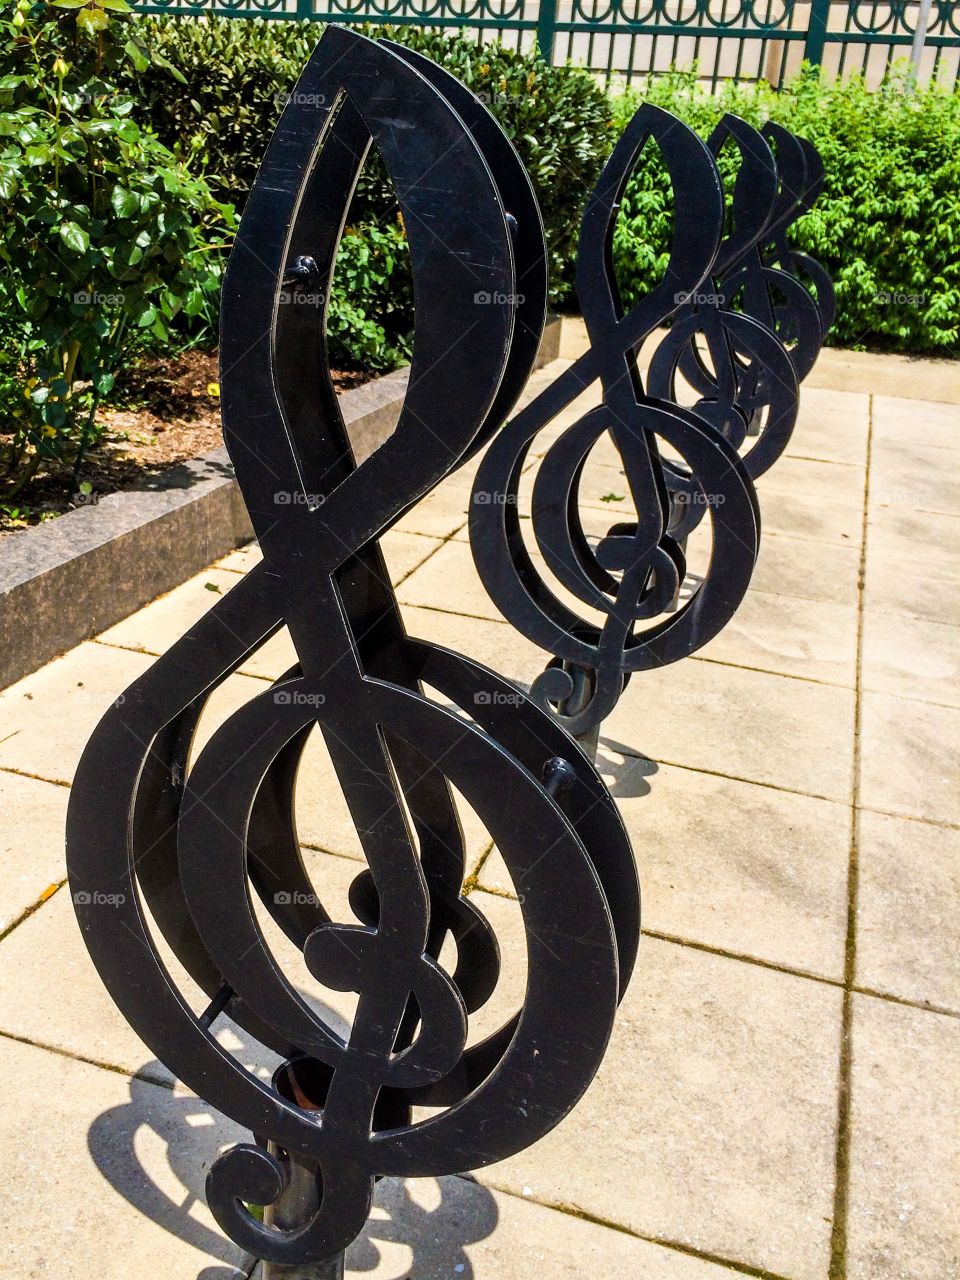 Bike rack in the shape of a musical note 